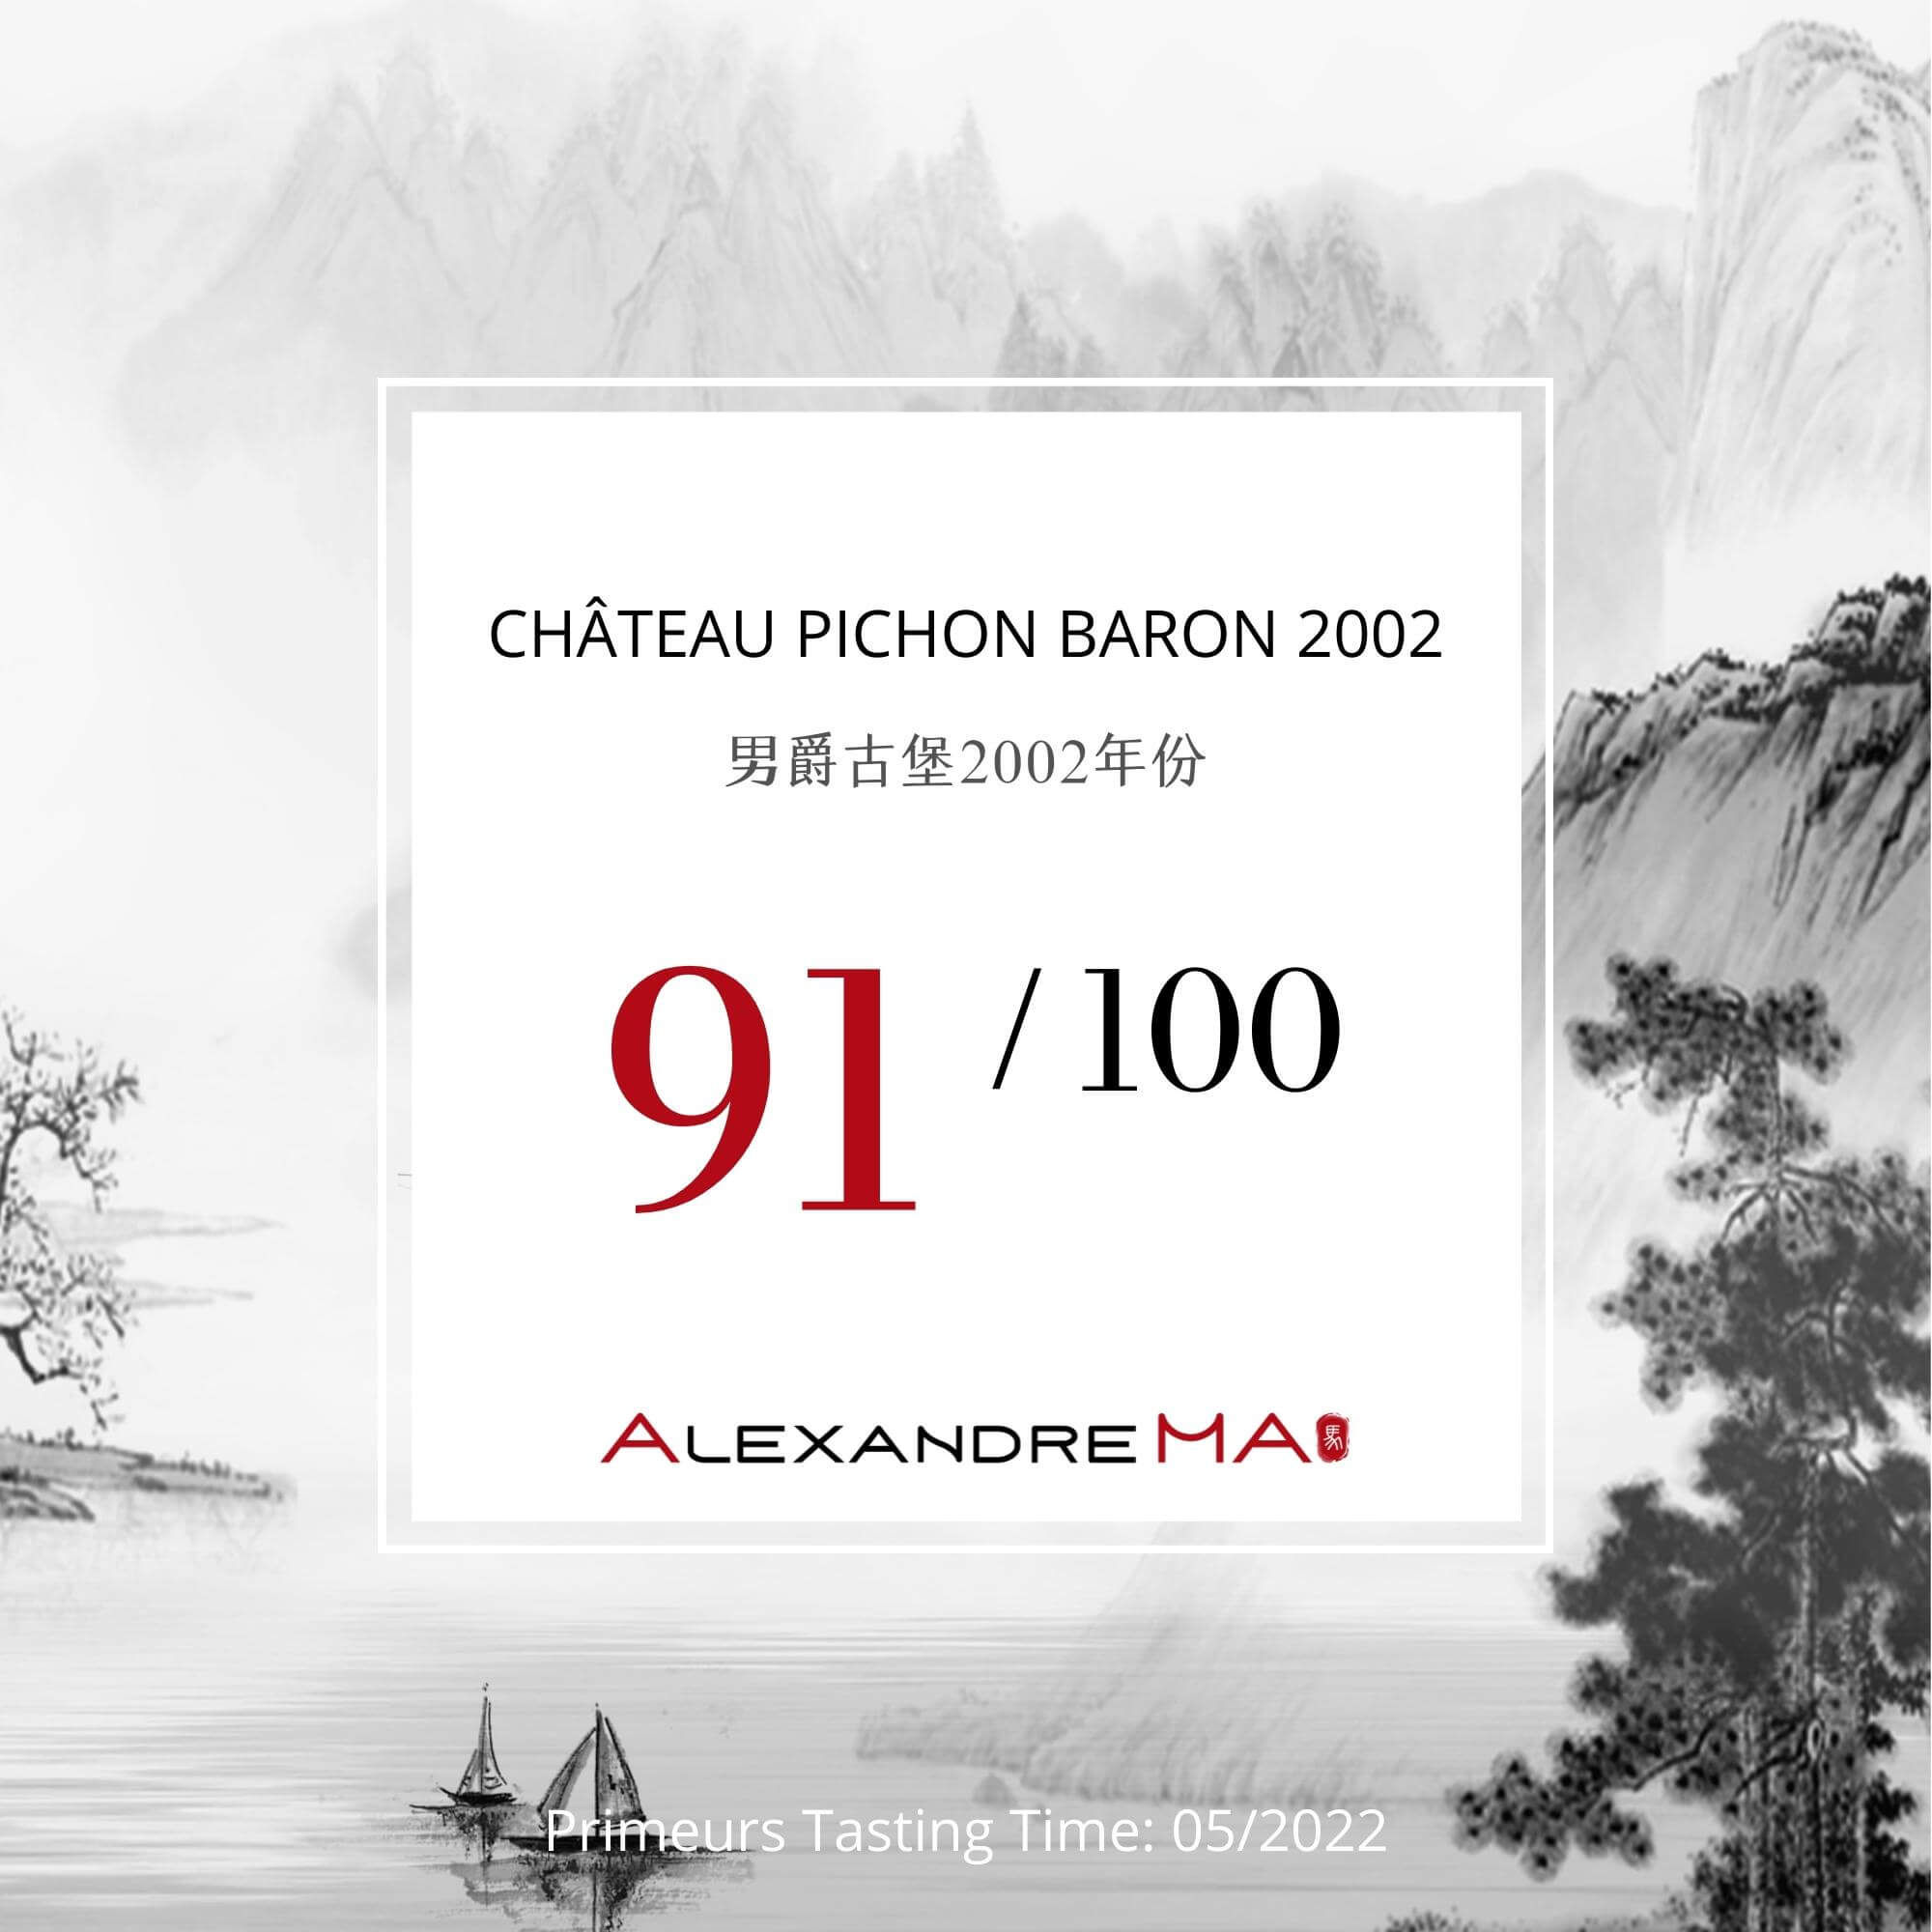 Château Pichon Baron 2002 - Alexandre MA